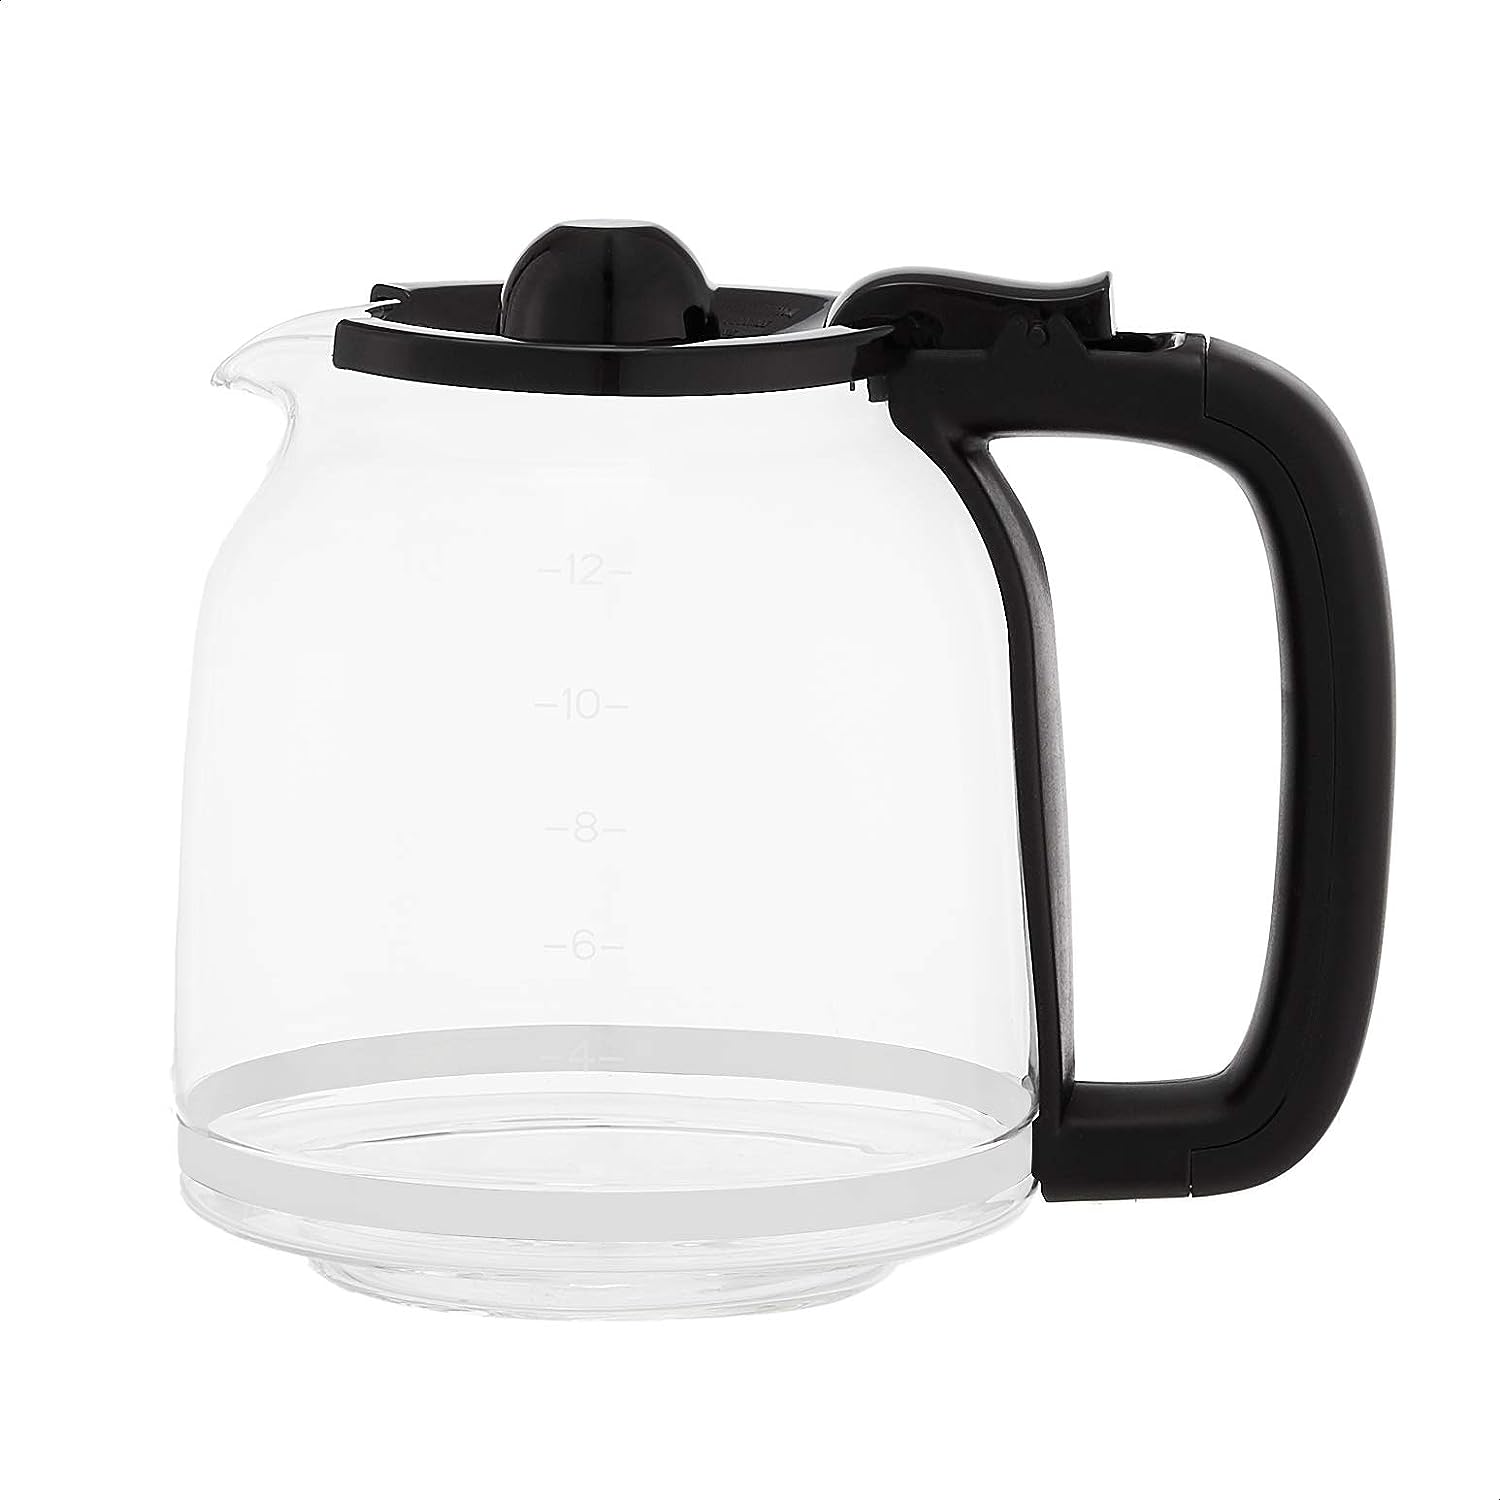 Amazon Basics 12 Cup Digital Coffeemaker Review